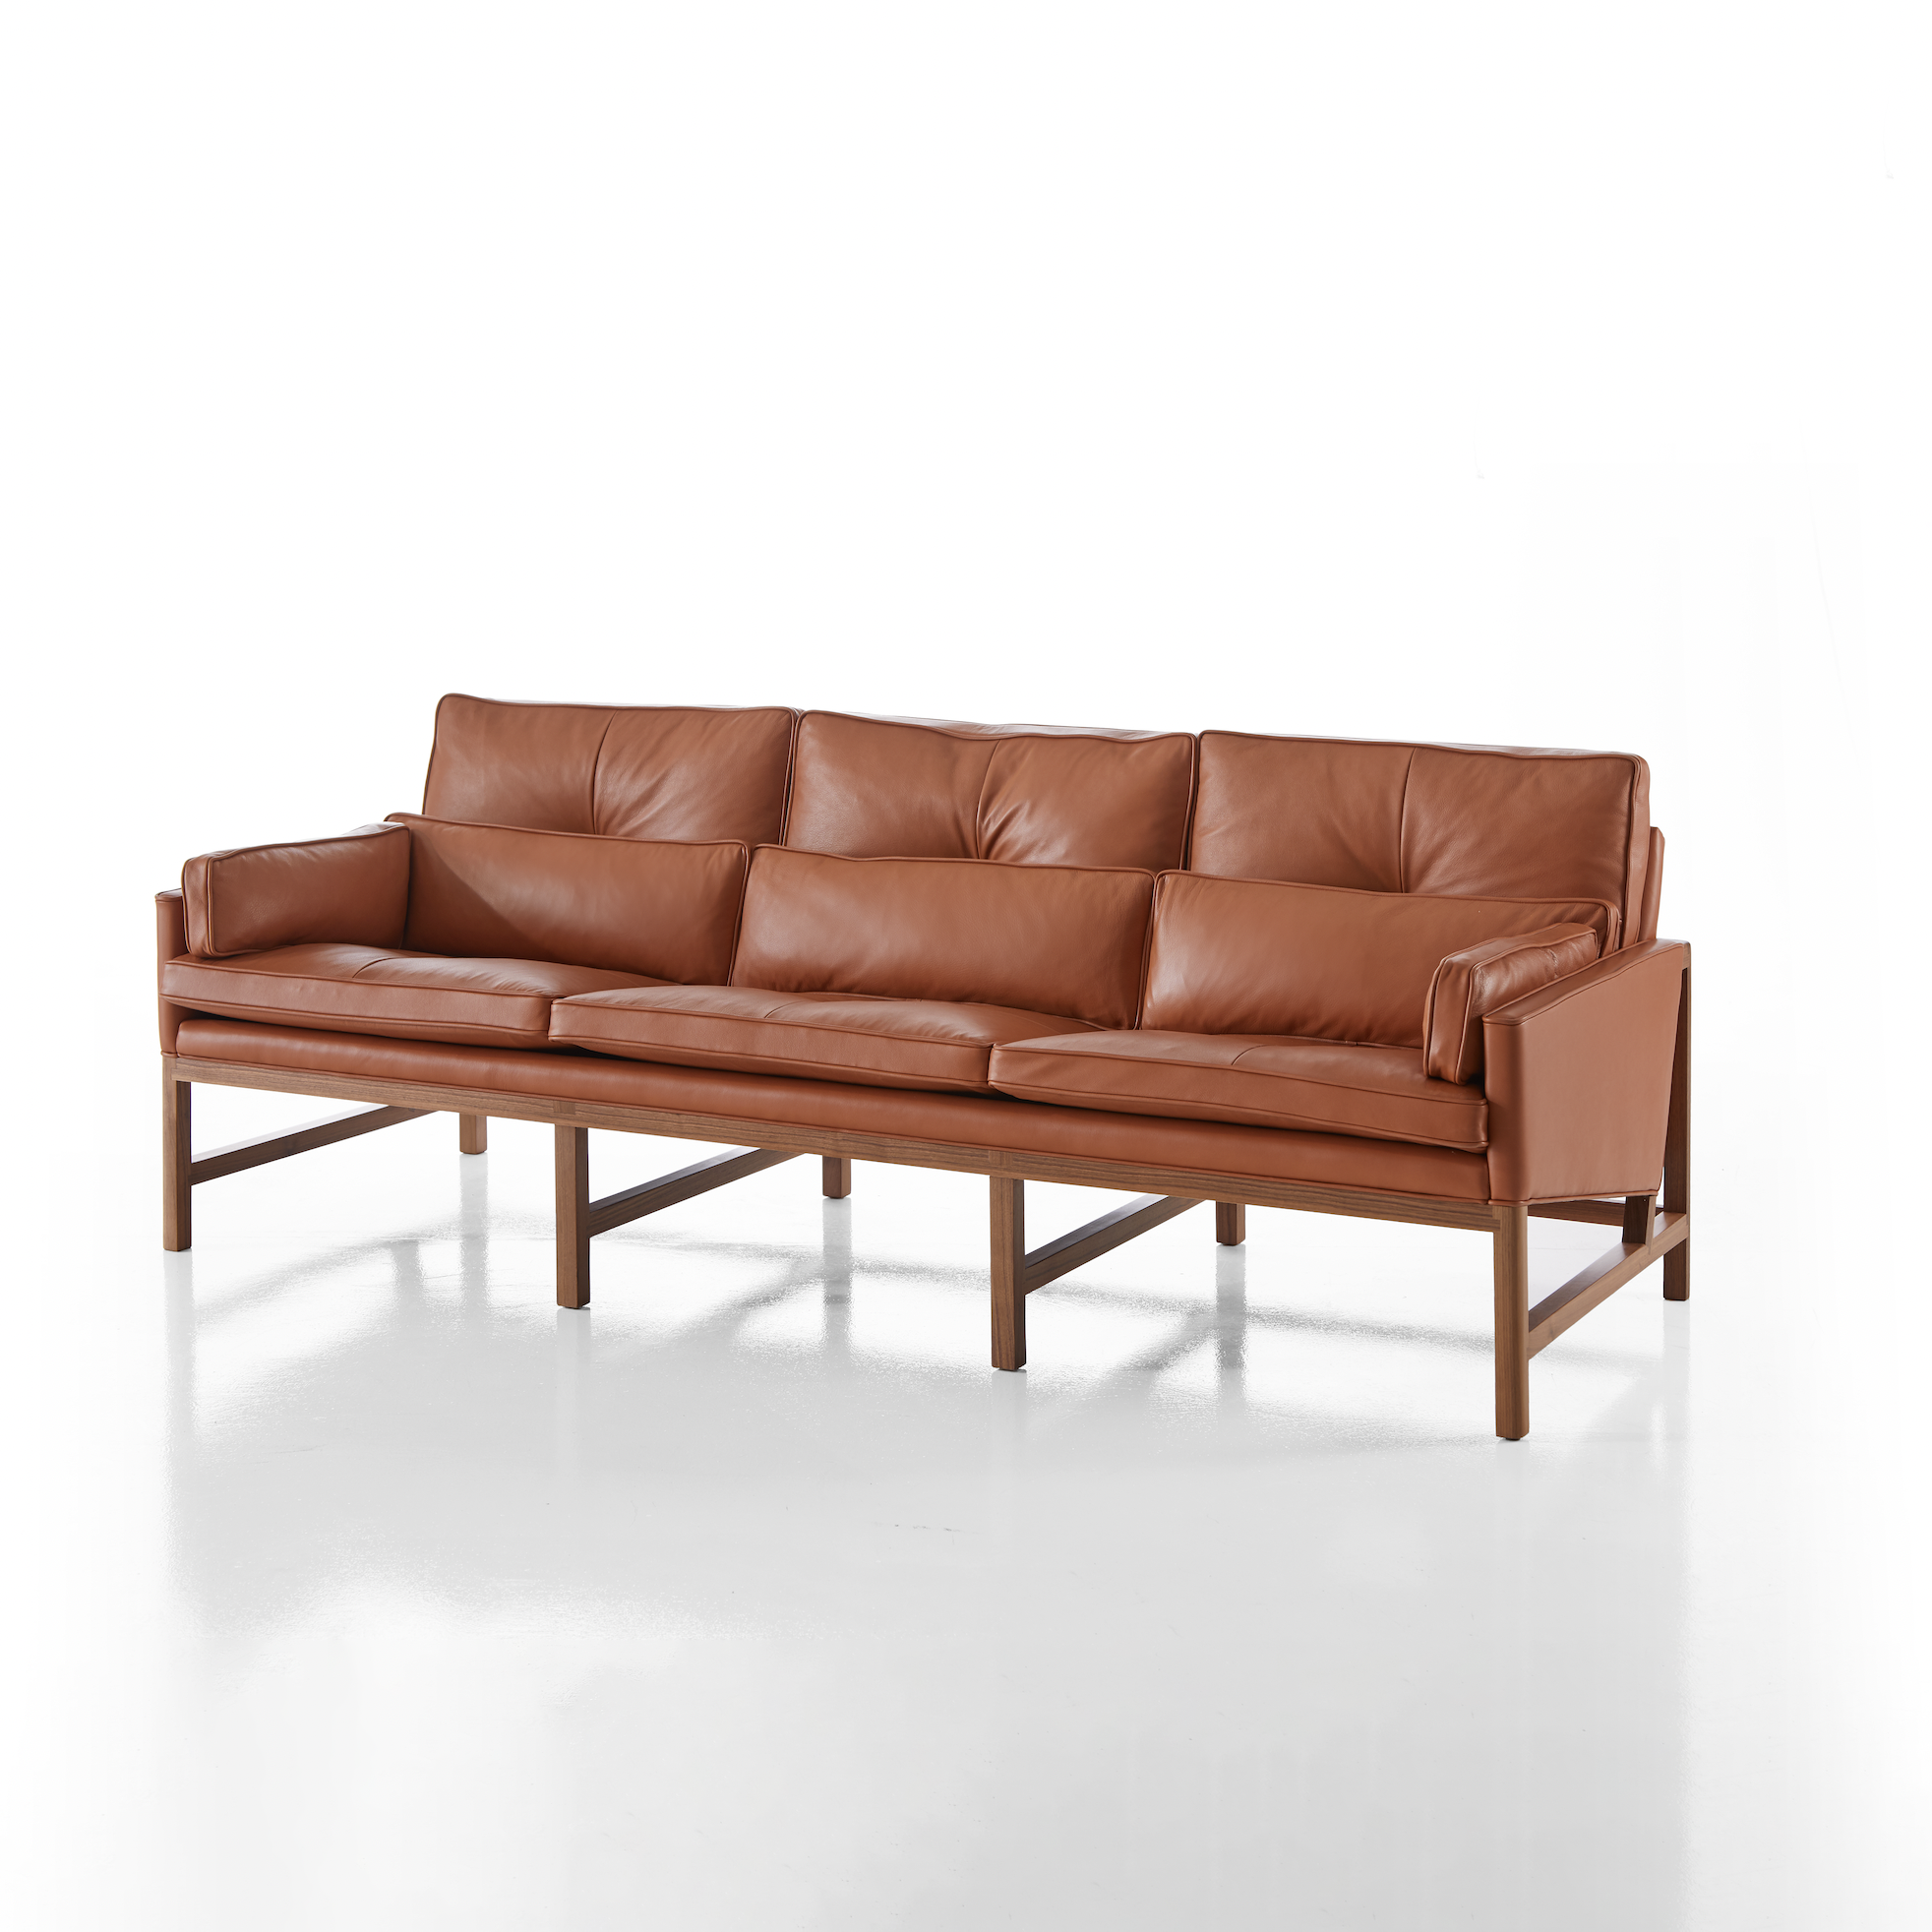 Main_CB-53-Wood-Frame-Sofa_Solid-Walnut_Grade-A-Leather-British-Tan_BassamFellows_005 (1)